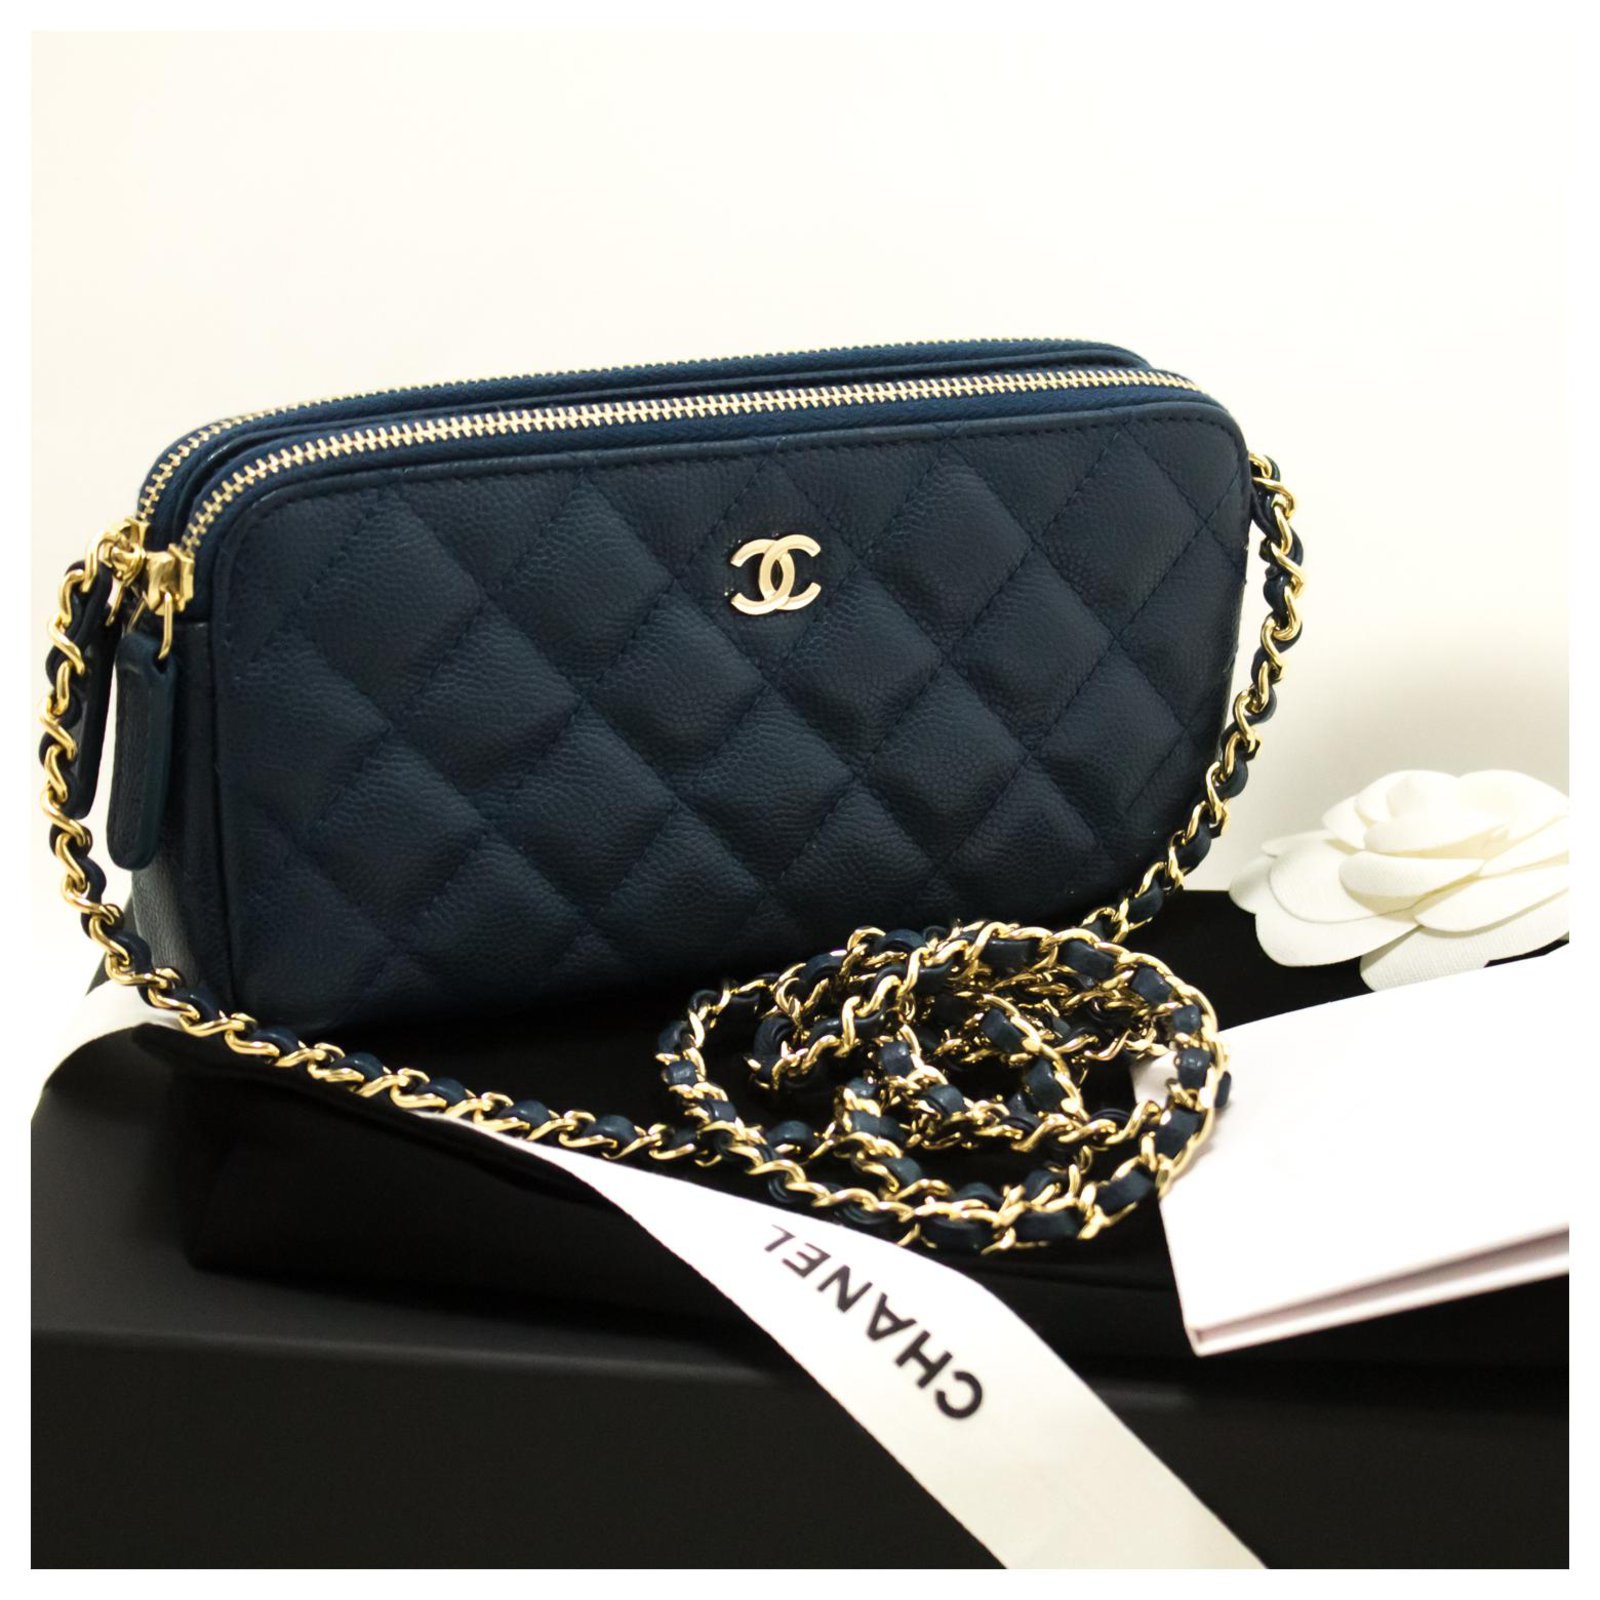 Chanel zip wallet in caviar